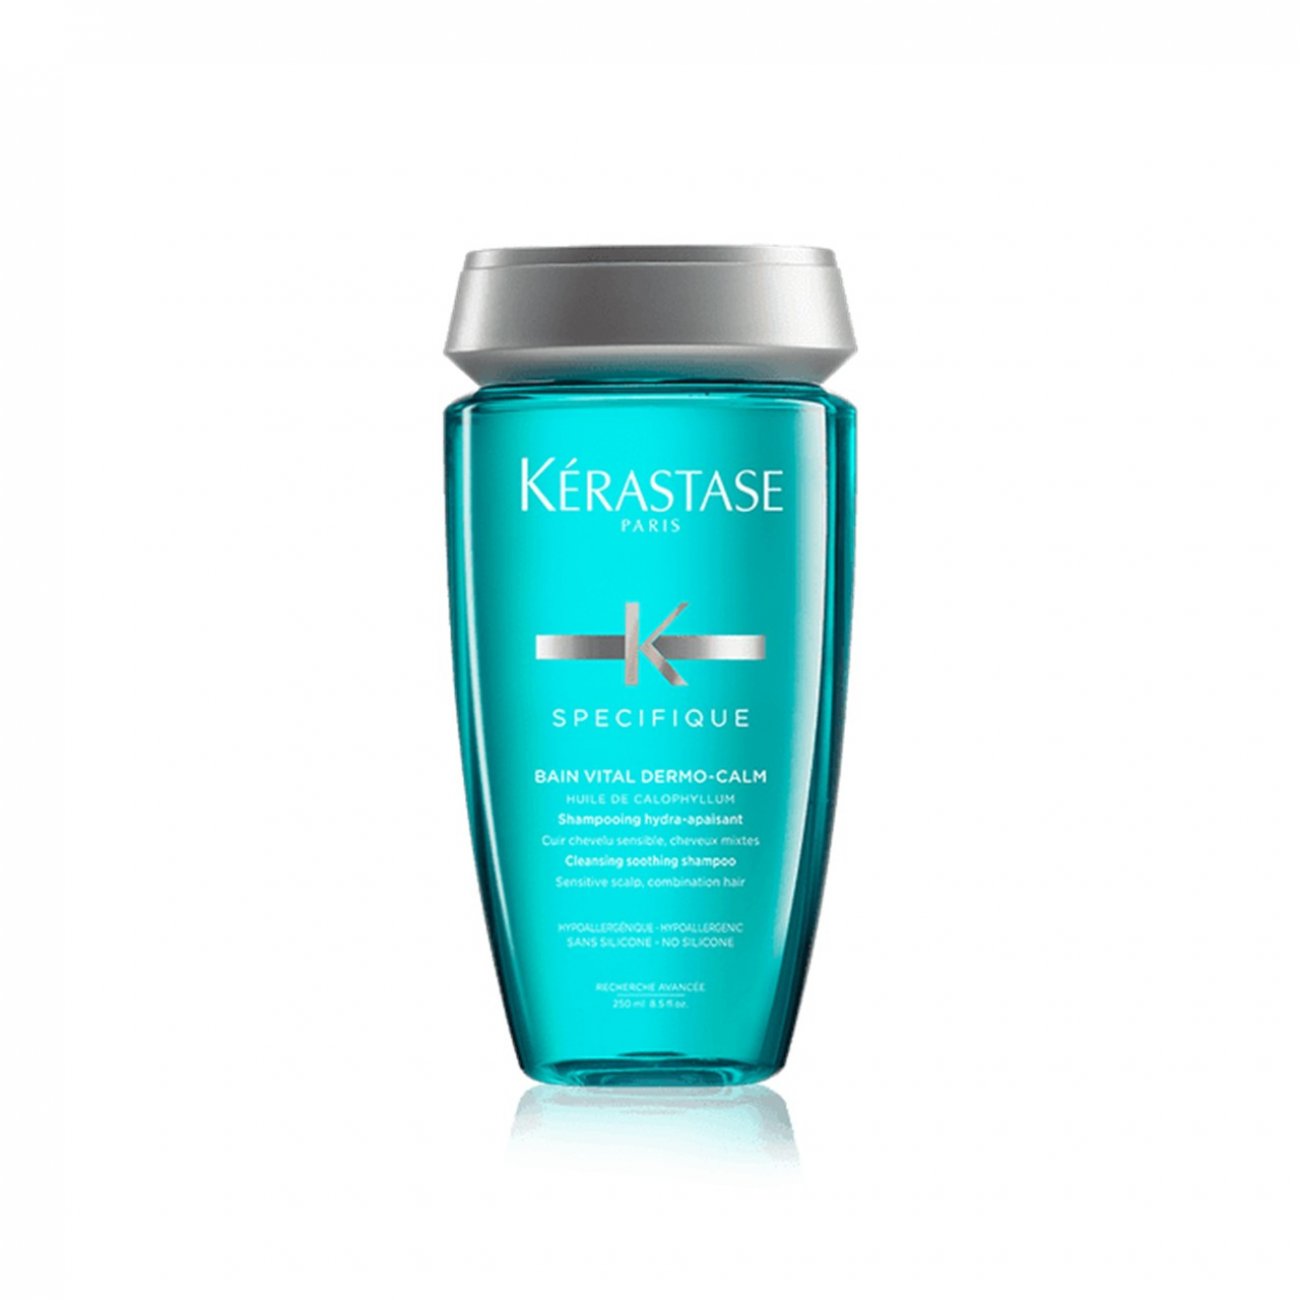 Buy Kérastase Specifique Bain Vital Dermo-Calm Shampoo (8.45fl oz) · USA